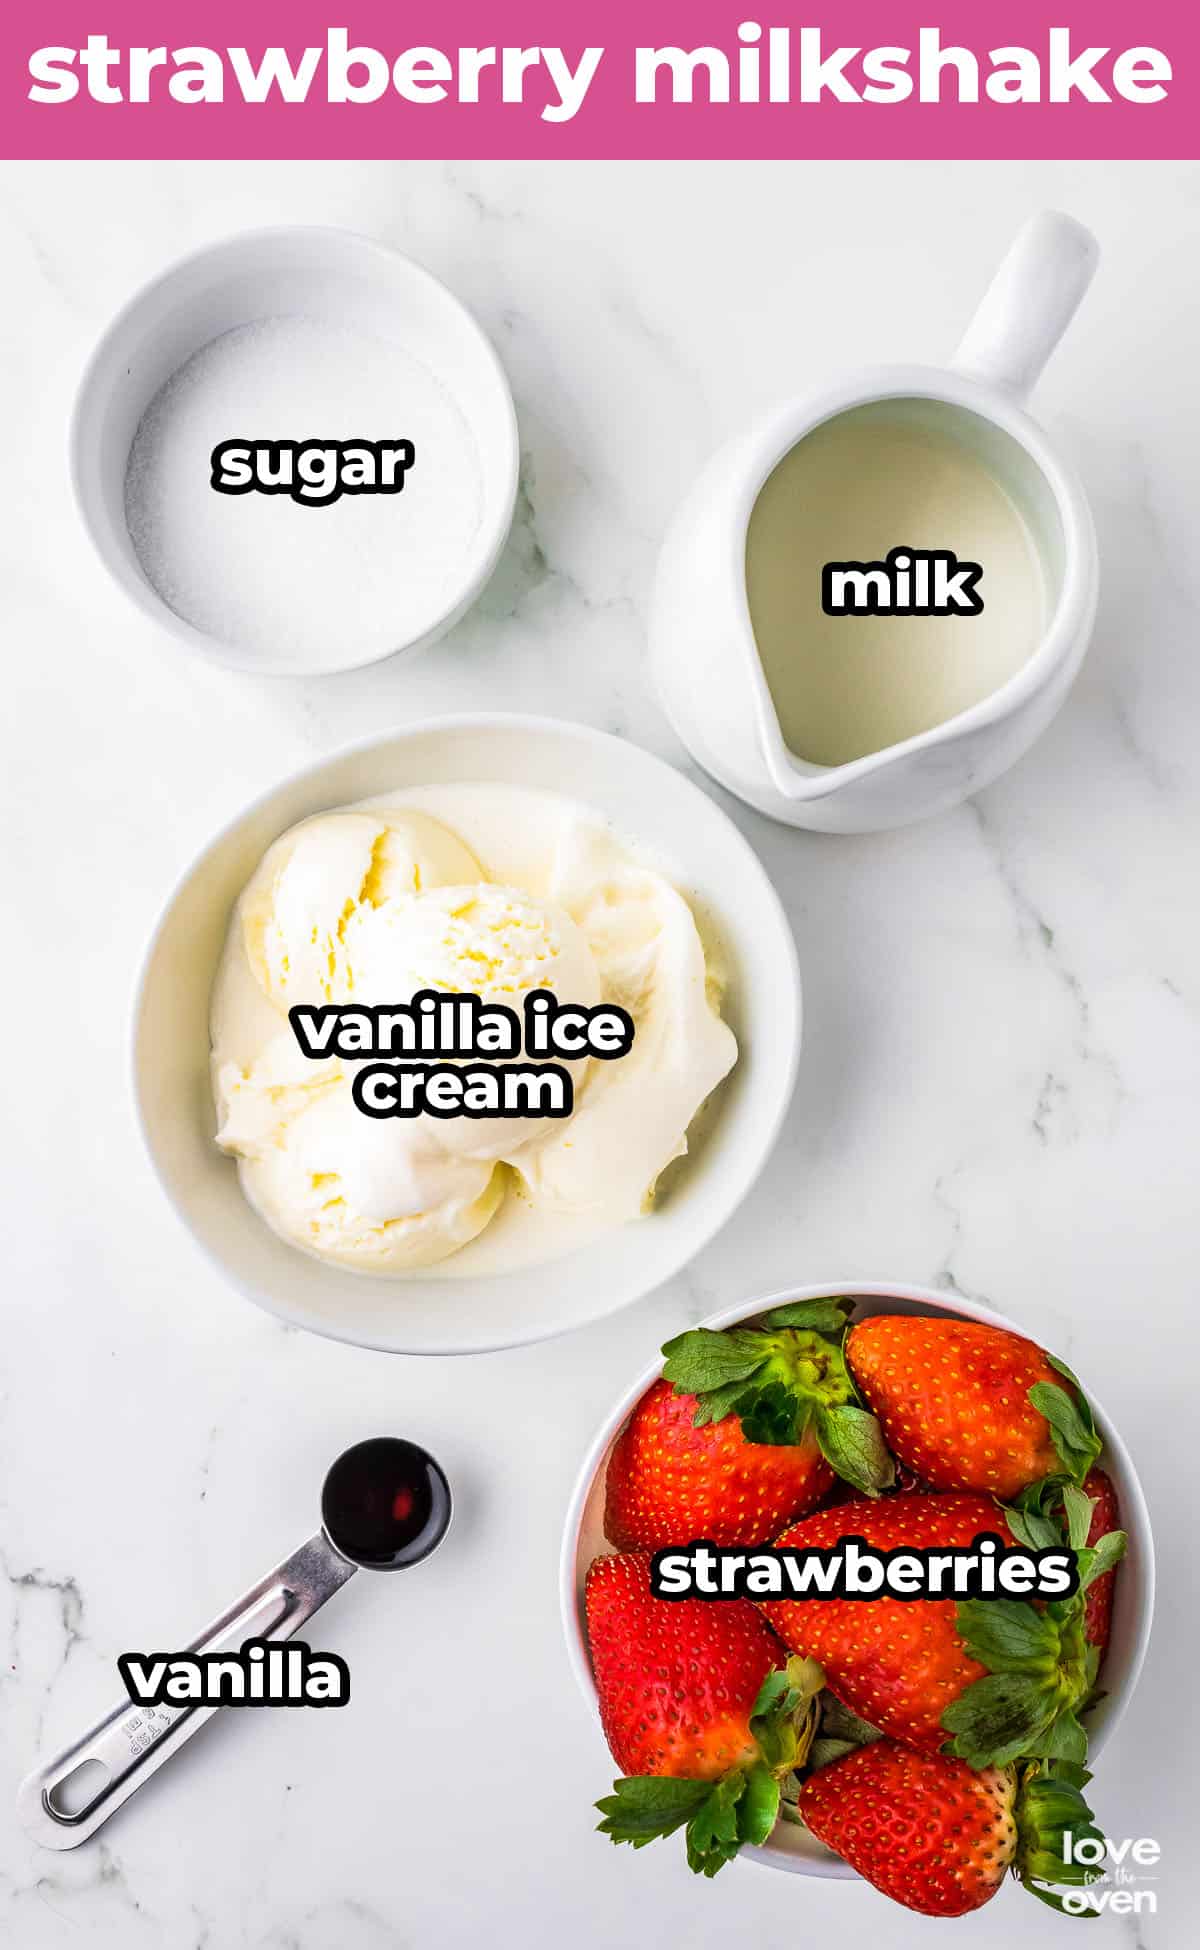 https://www.lovefromtheoven.com/wp-content/uploads/2023/02/strawberry-milkshake-ingredients.jpg